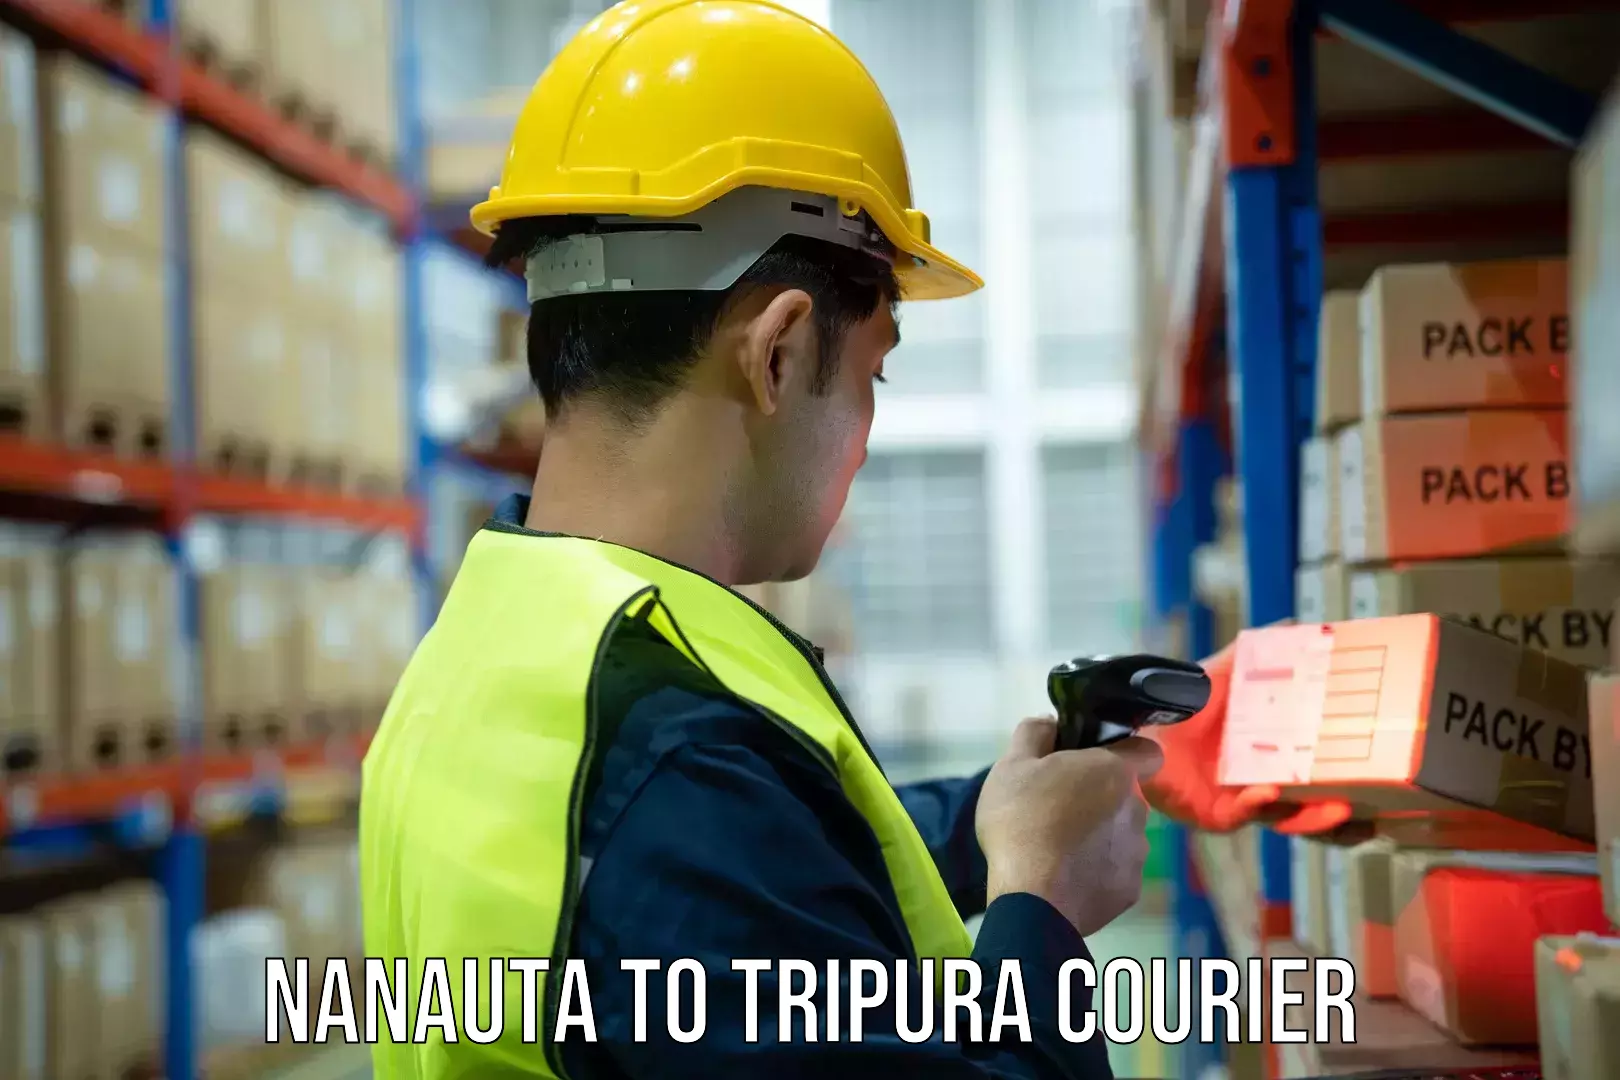 Efficient package consolidation Nanauta to Sonamura